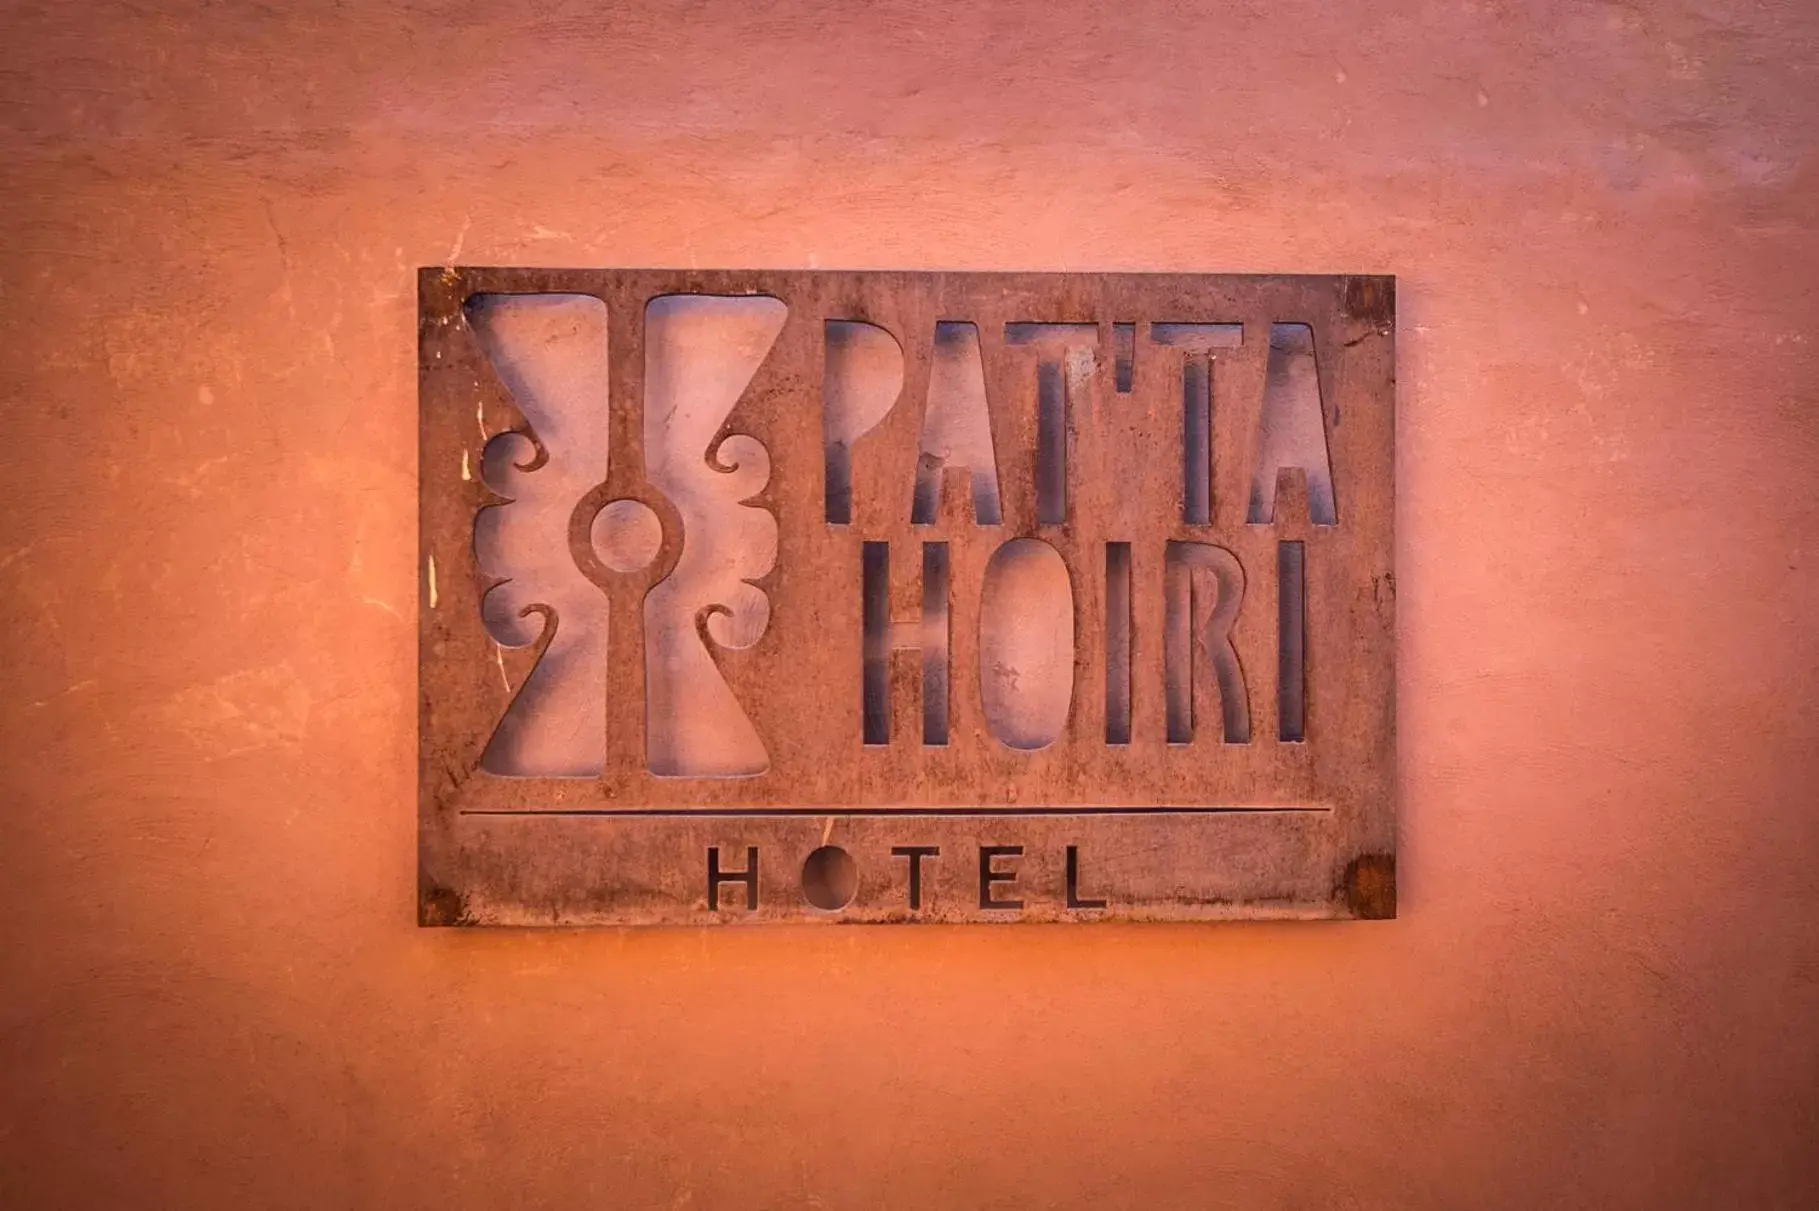 Property logo or sign, Property Logo/Sign in Hotel Pat'ta Hoiri